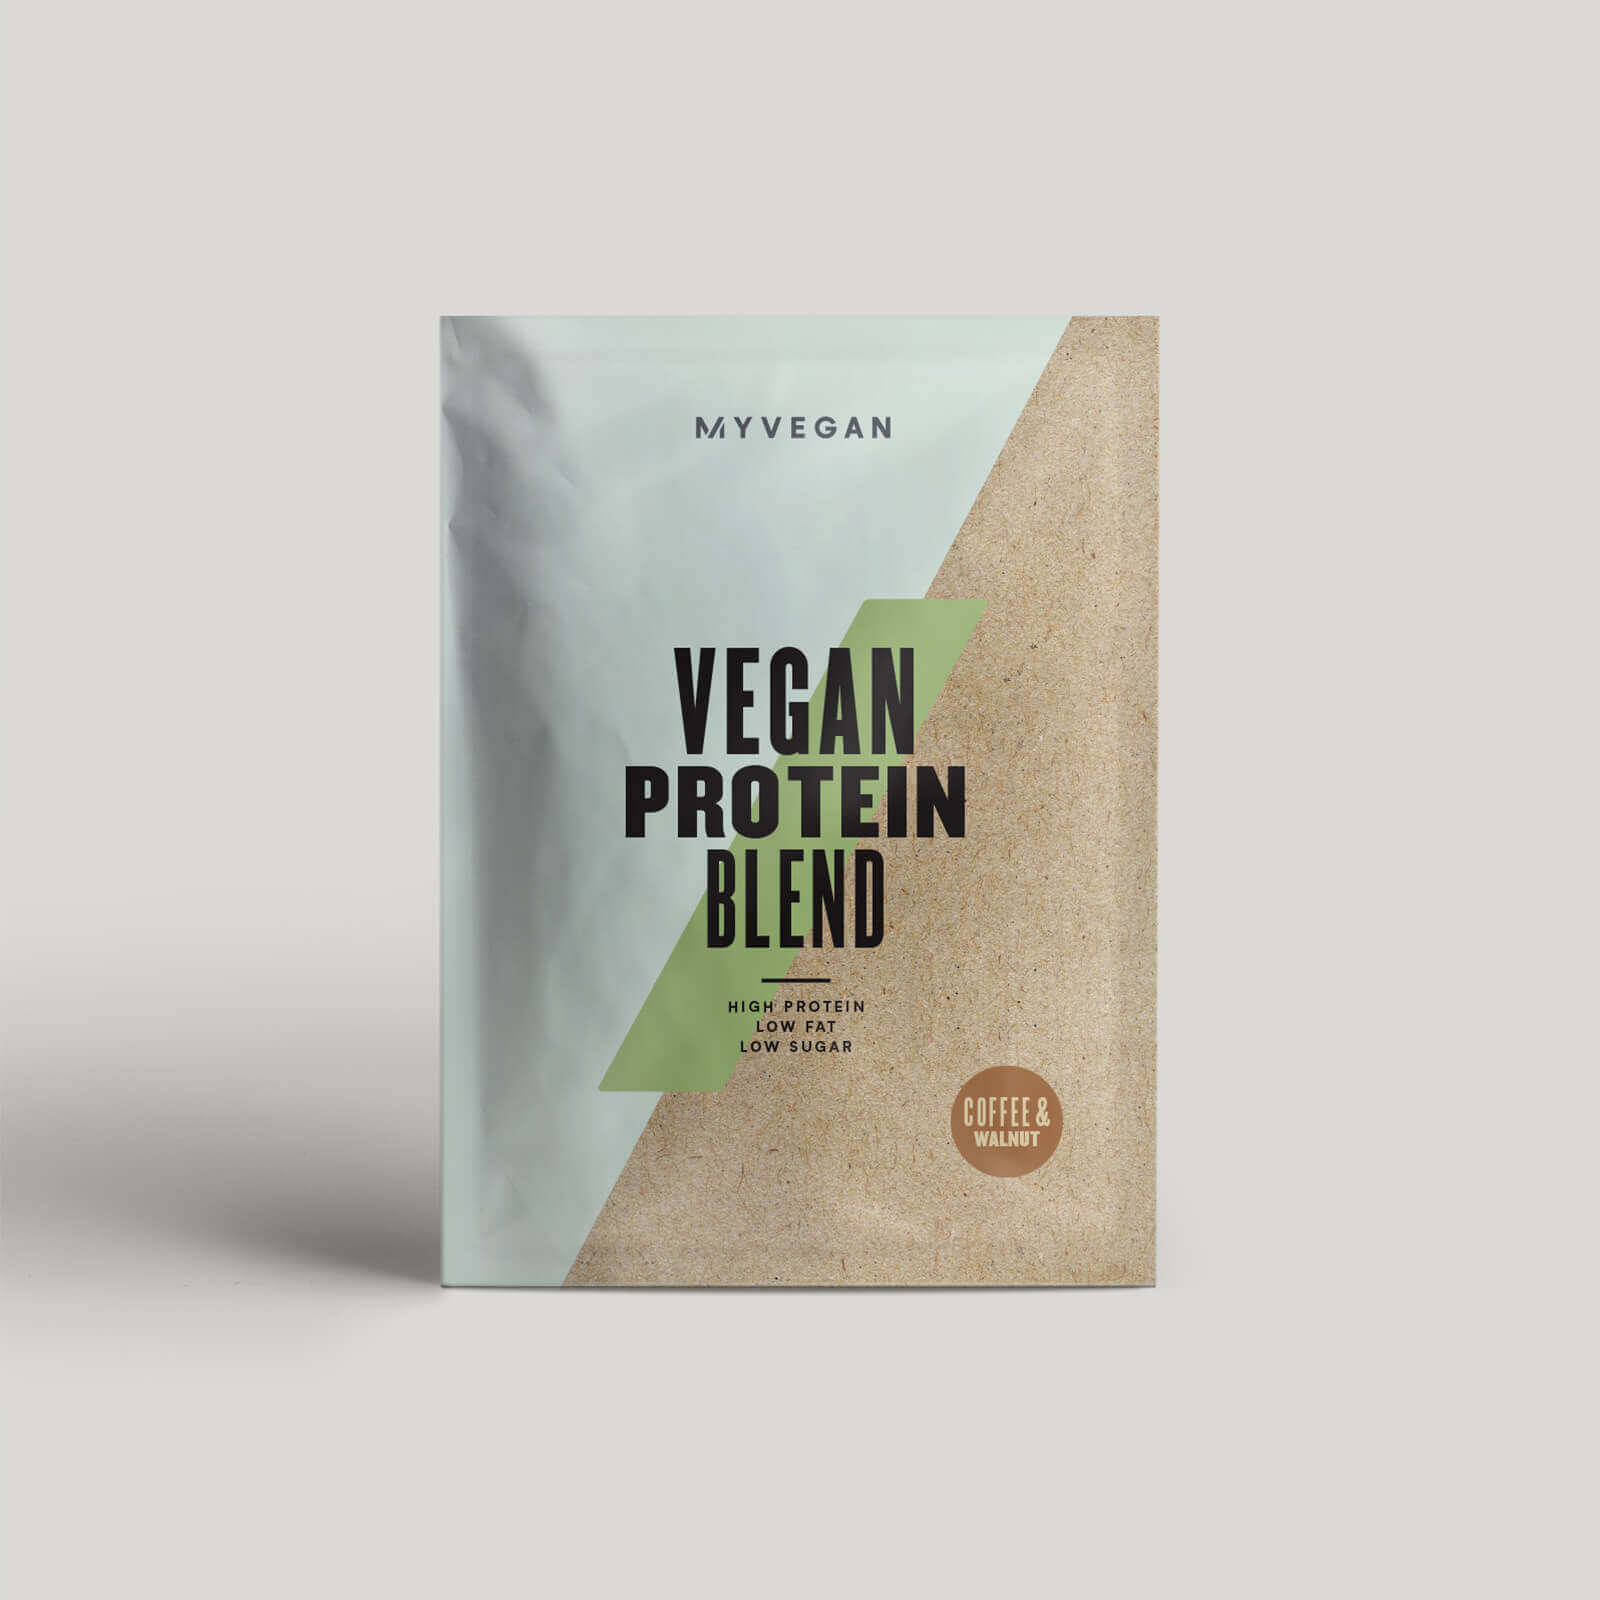 Myvegan Vegan Protein Blend (Sample) - Coffee & Walnut